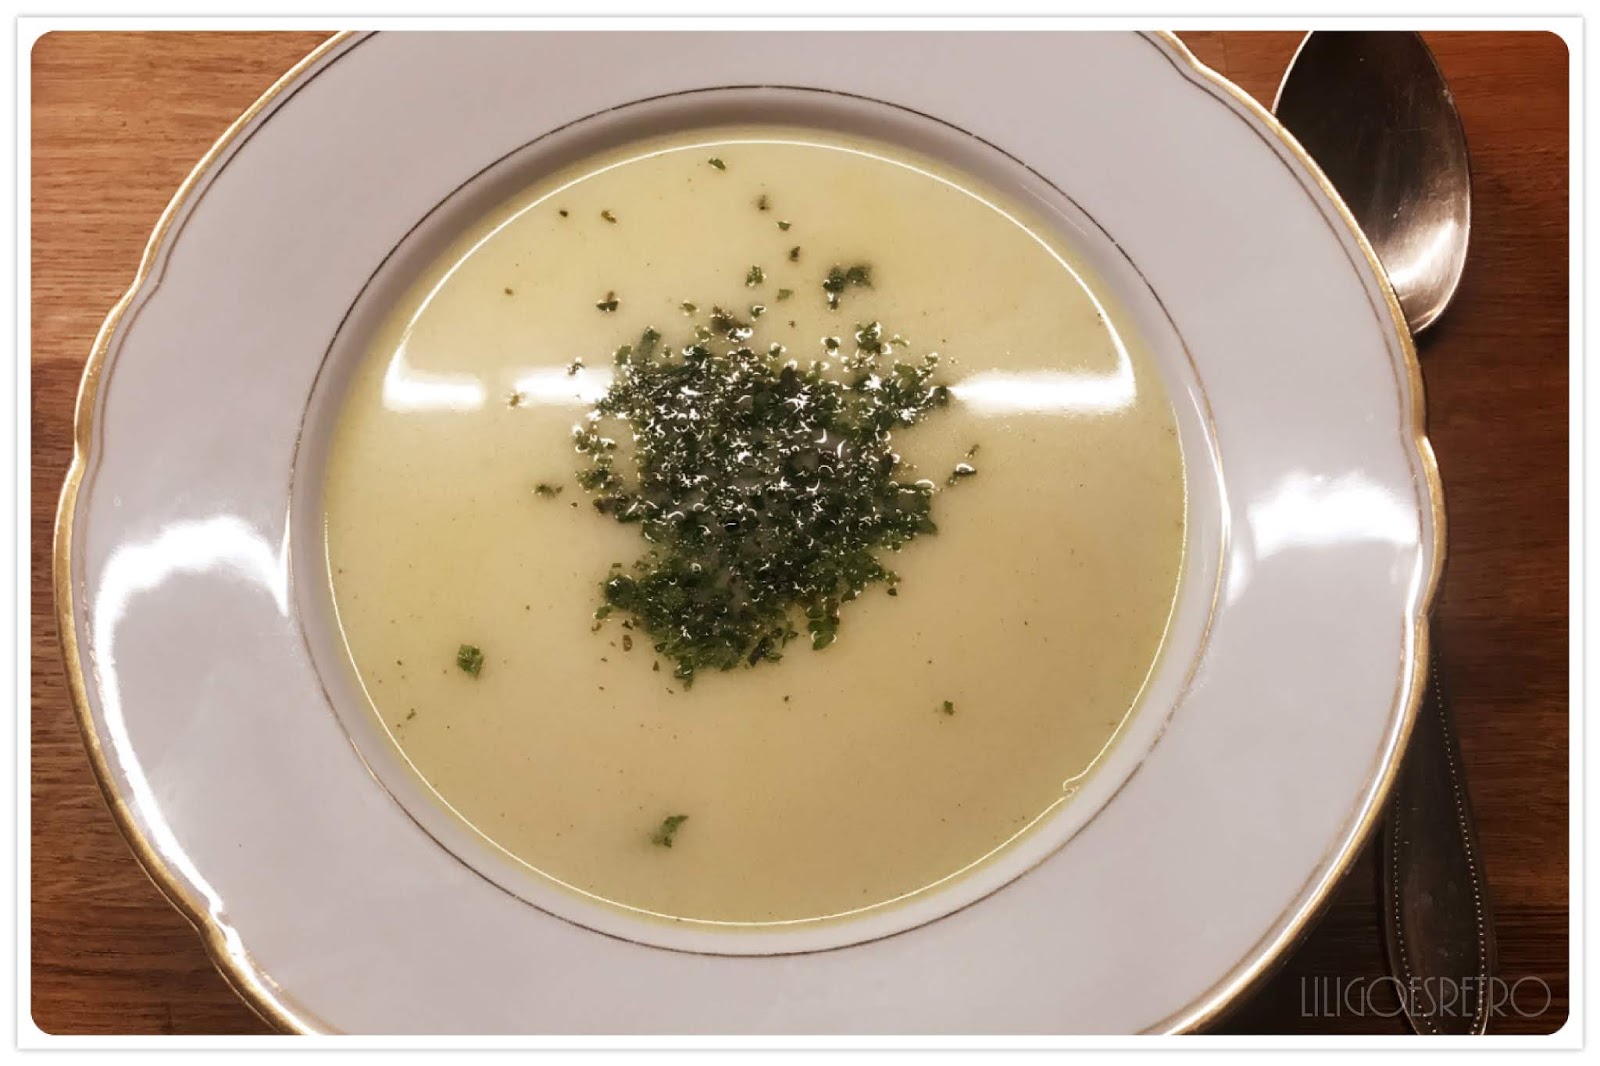 Lili goes RETRO!: Suppen - Allgäuer Käsesuppe